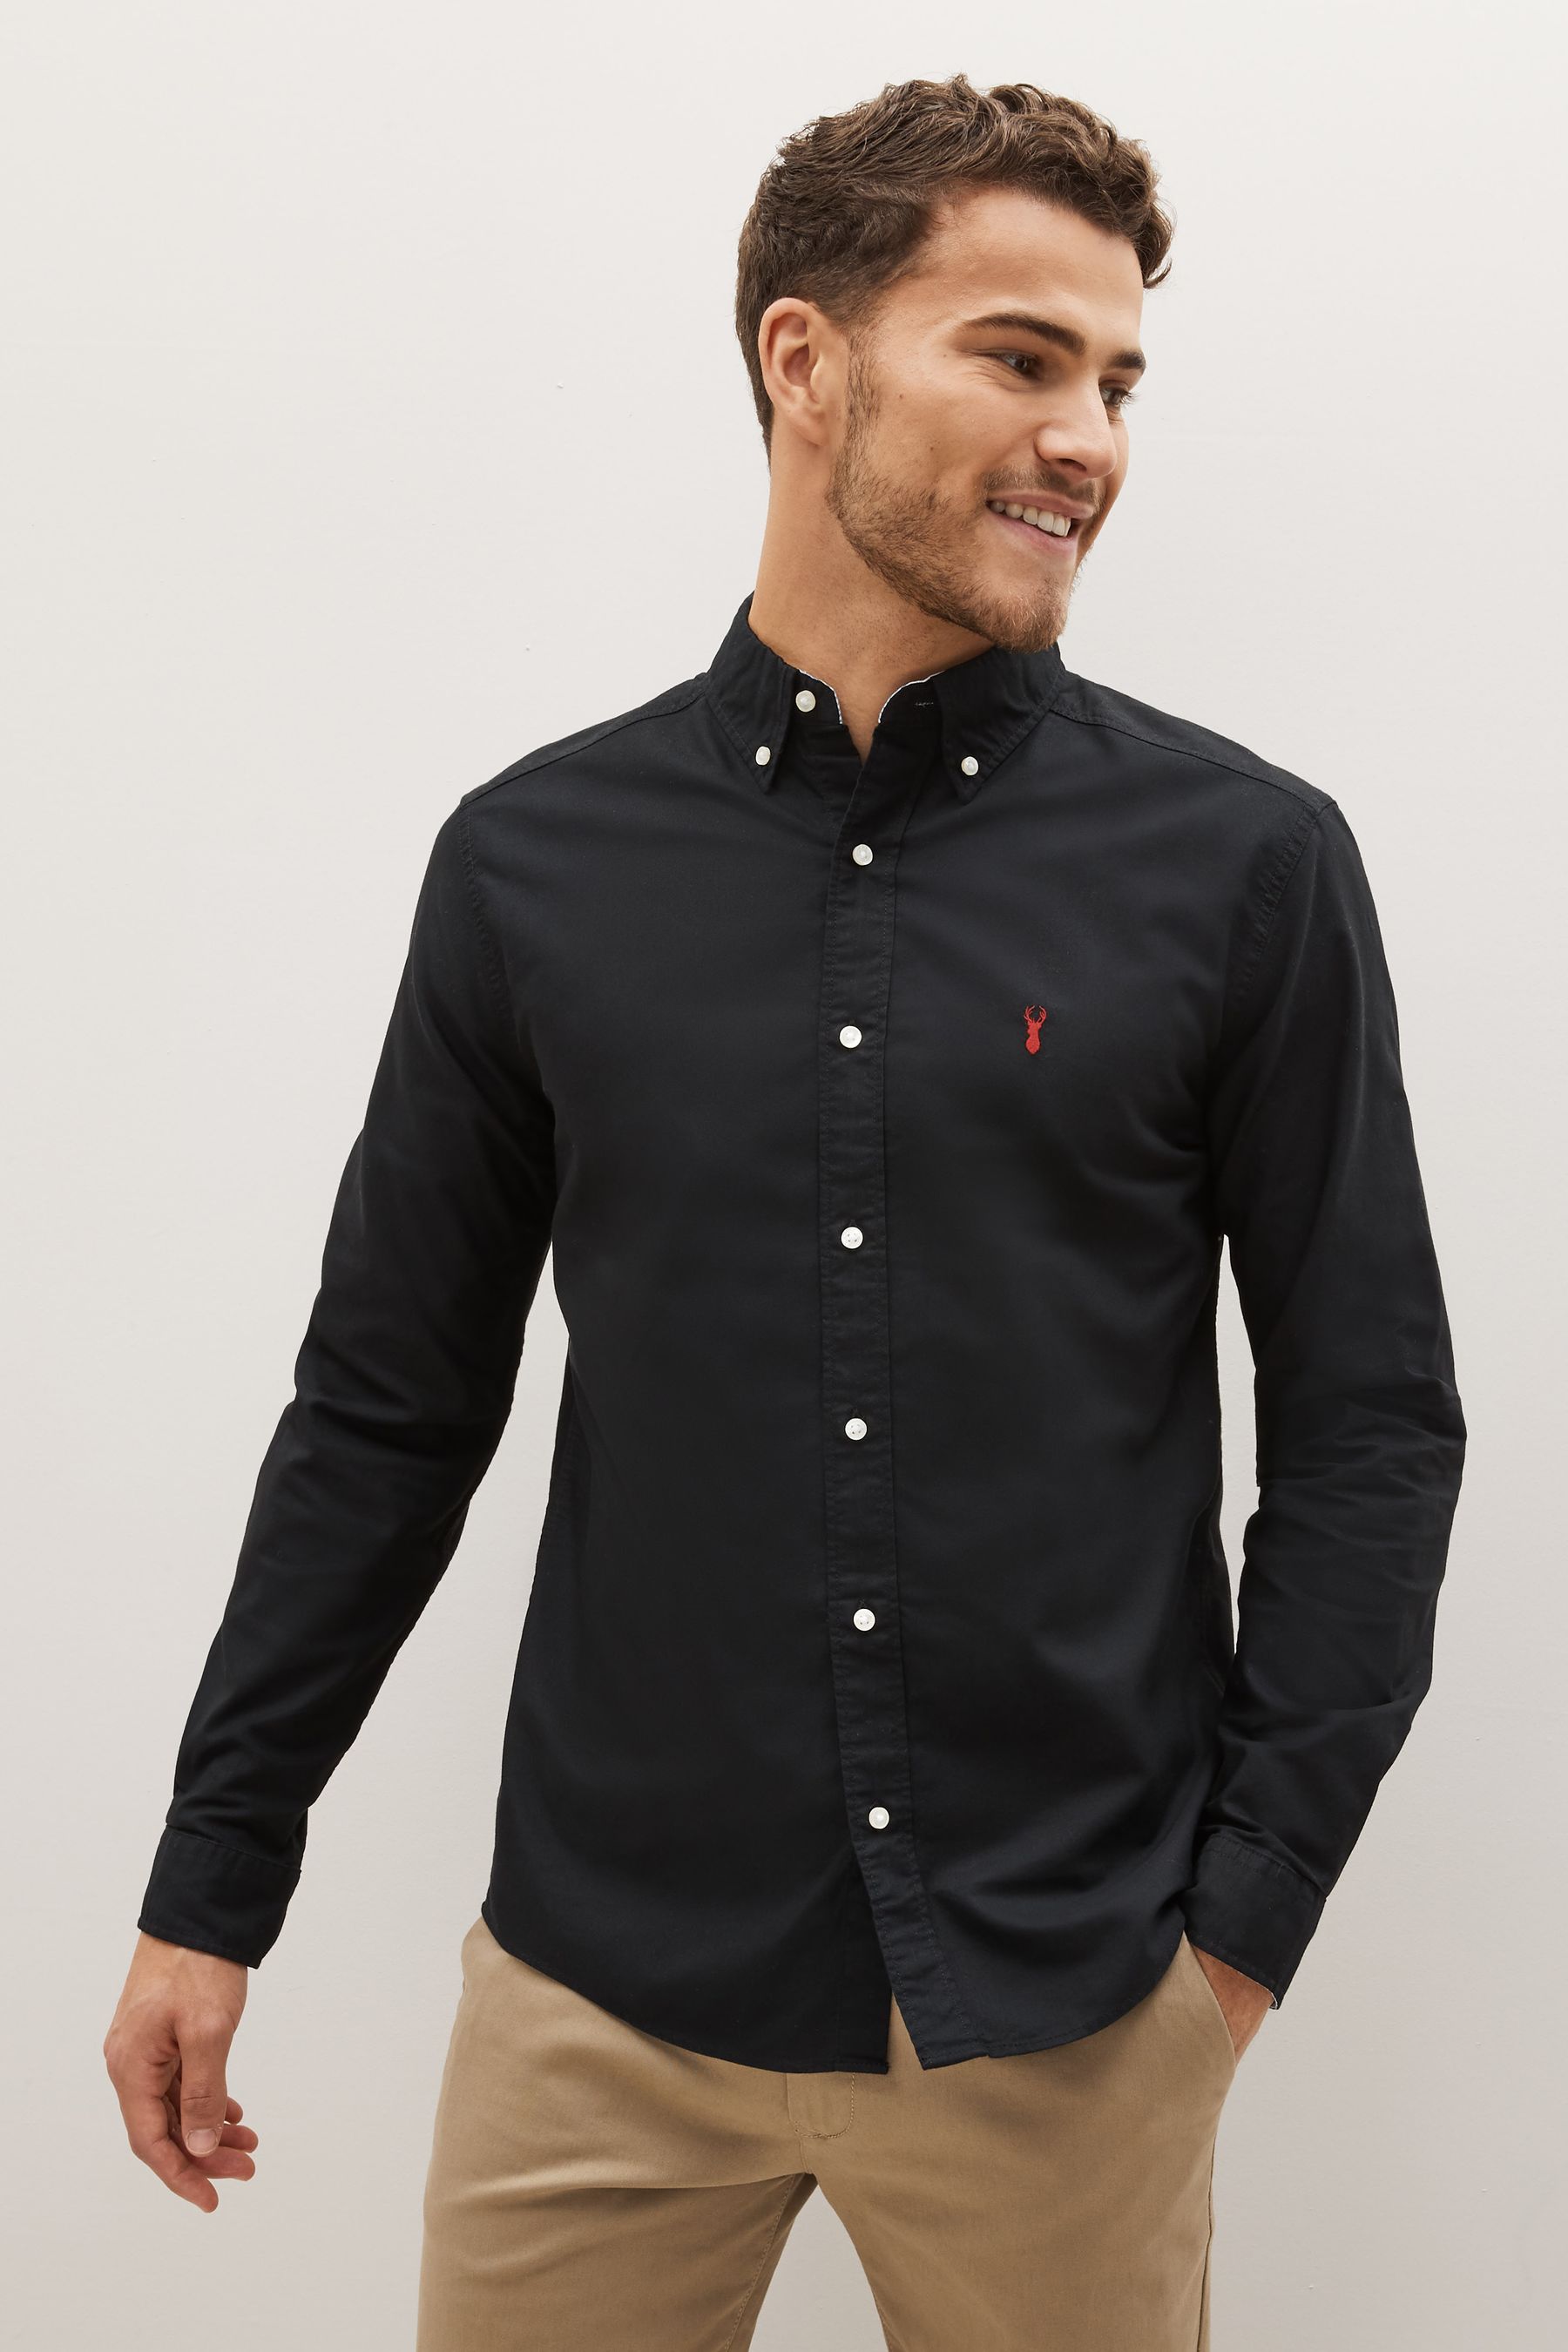 Buy Black Regular Fit Long Sleeve Oxford Shirt from Next Saudi Arabia